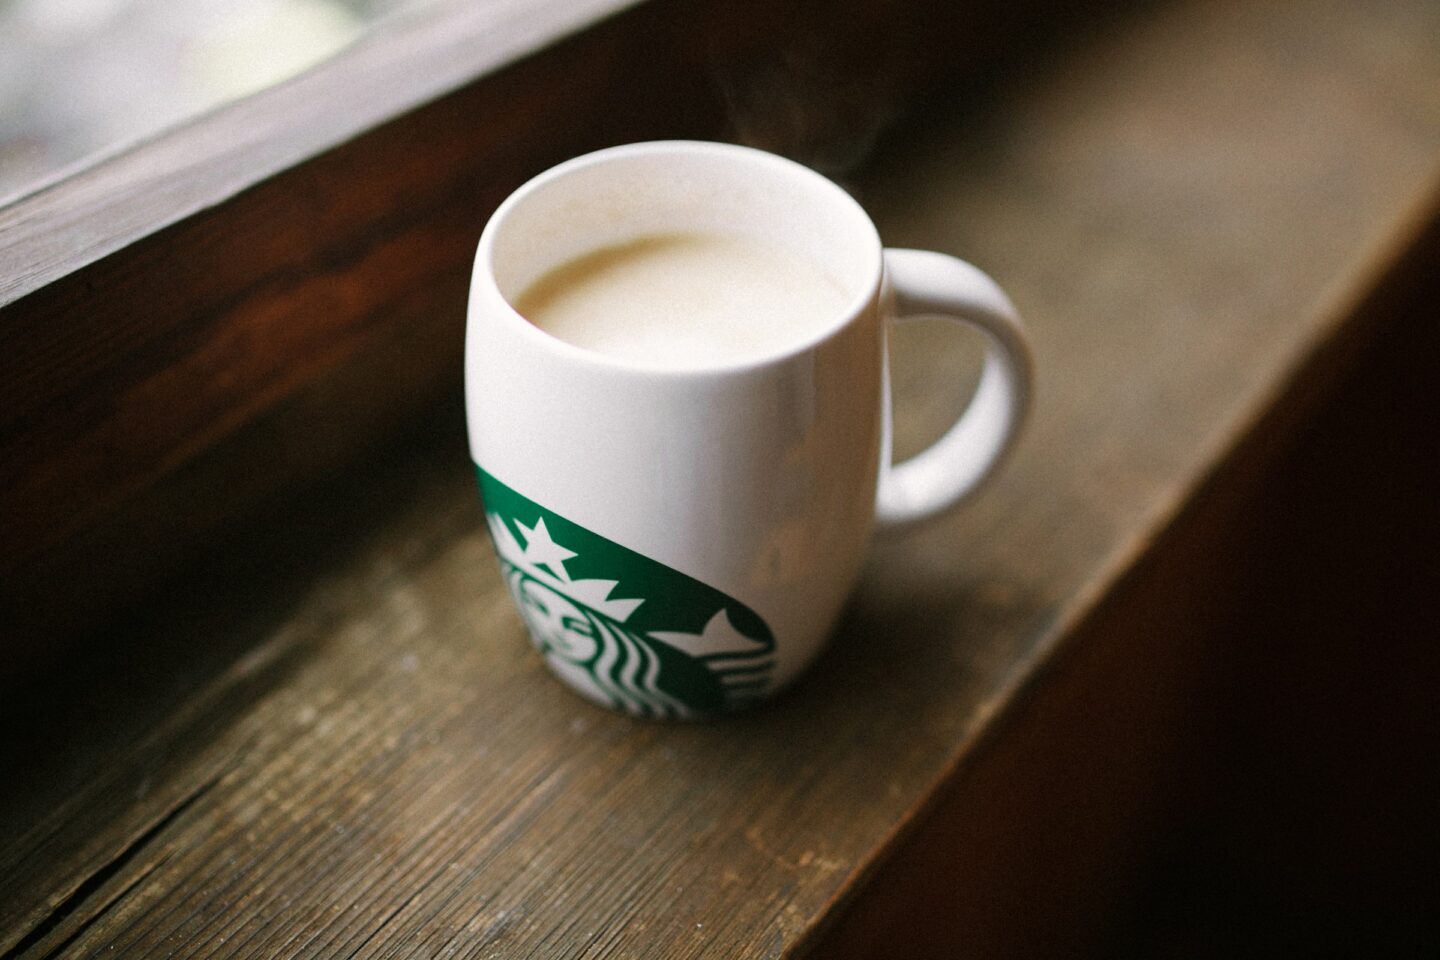 starbucks ceramic mug containing coffee on wooden windowsill